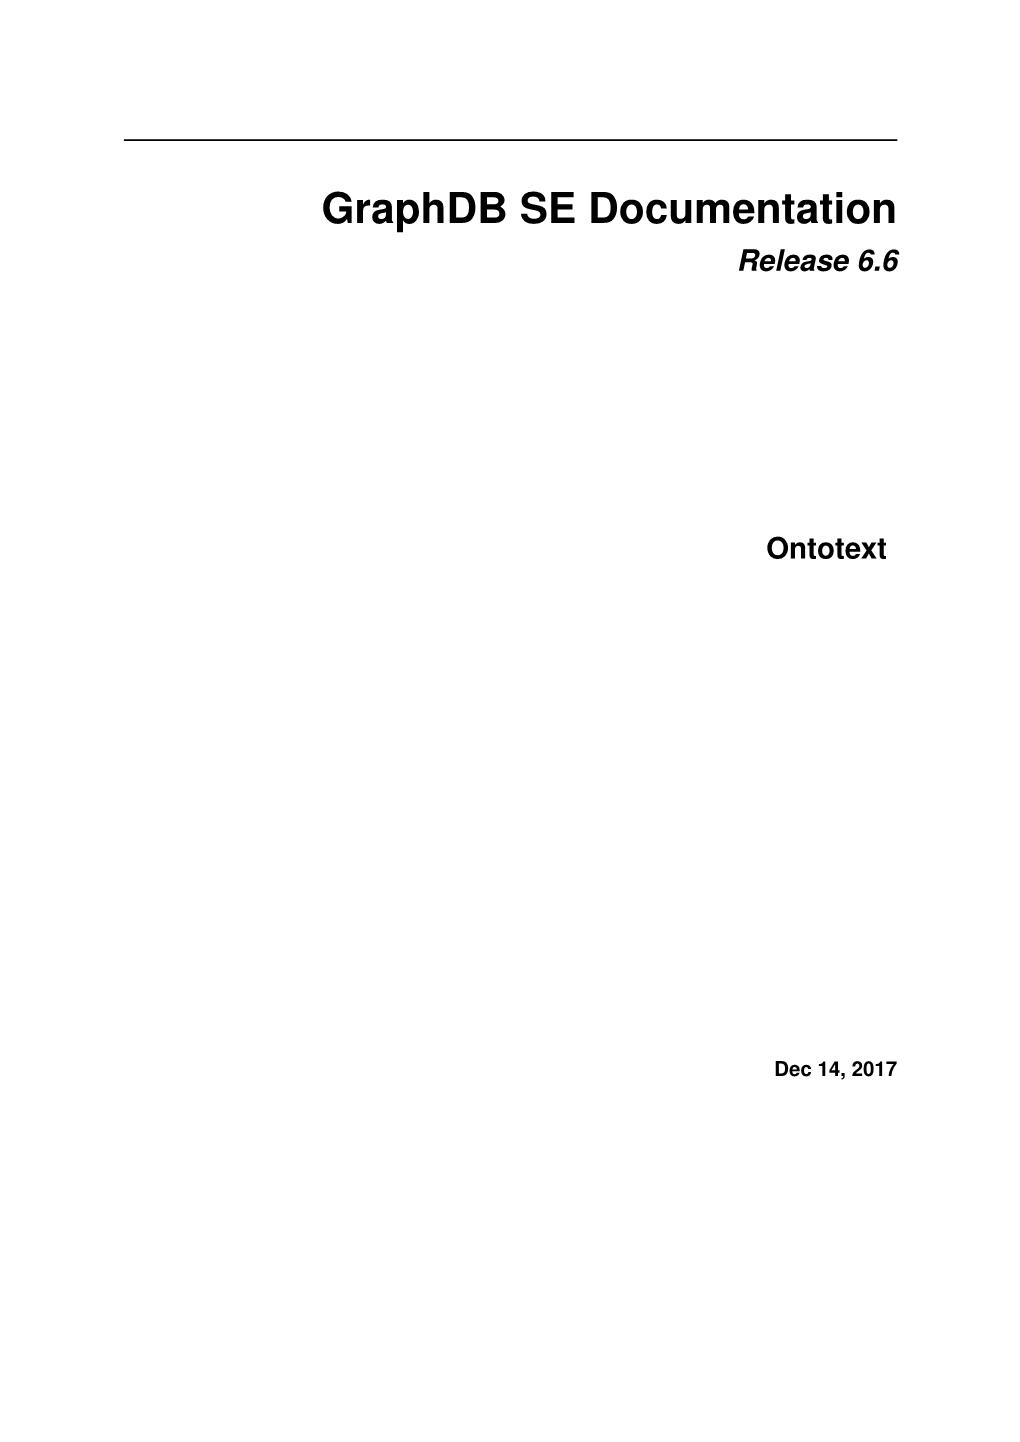 Graphdb SE Documentation Release 6.6